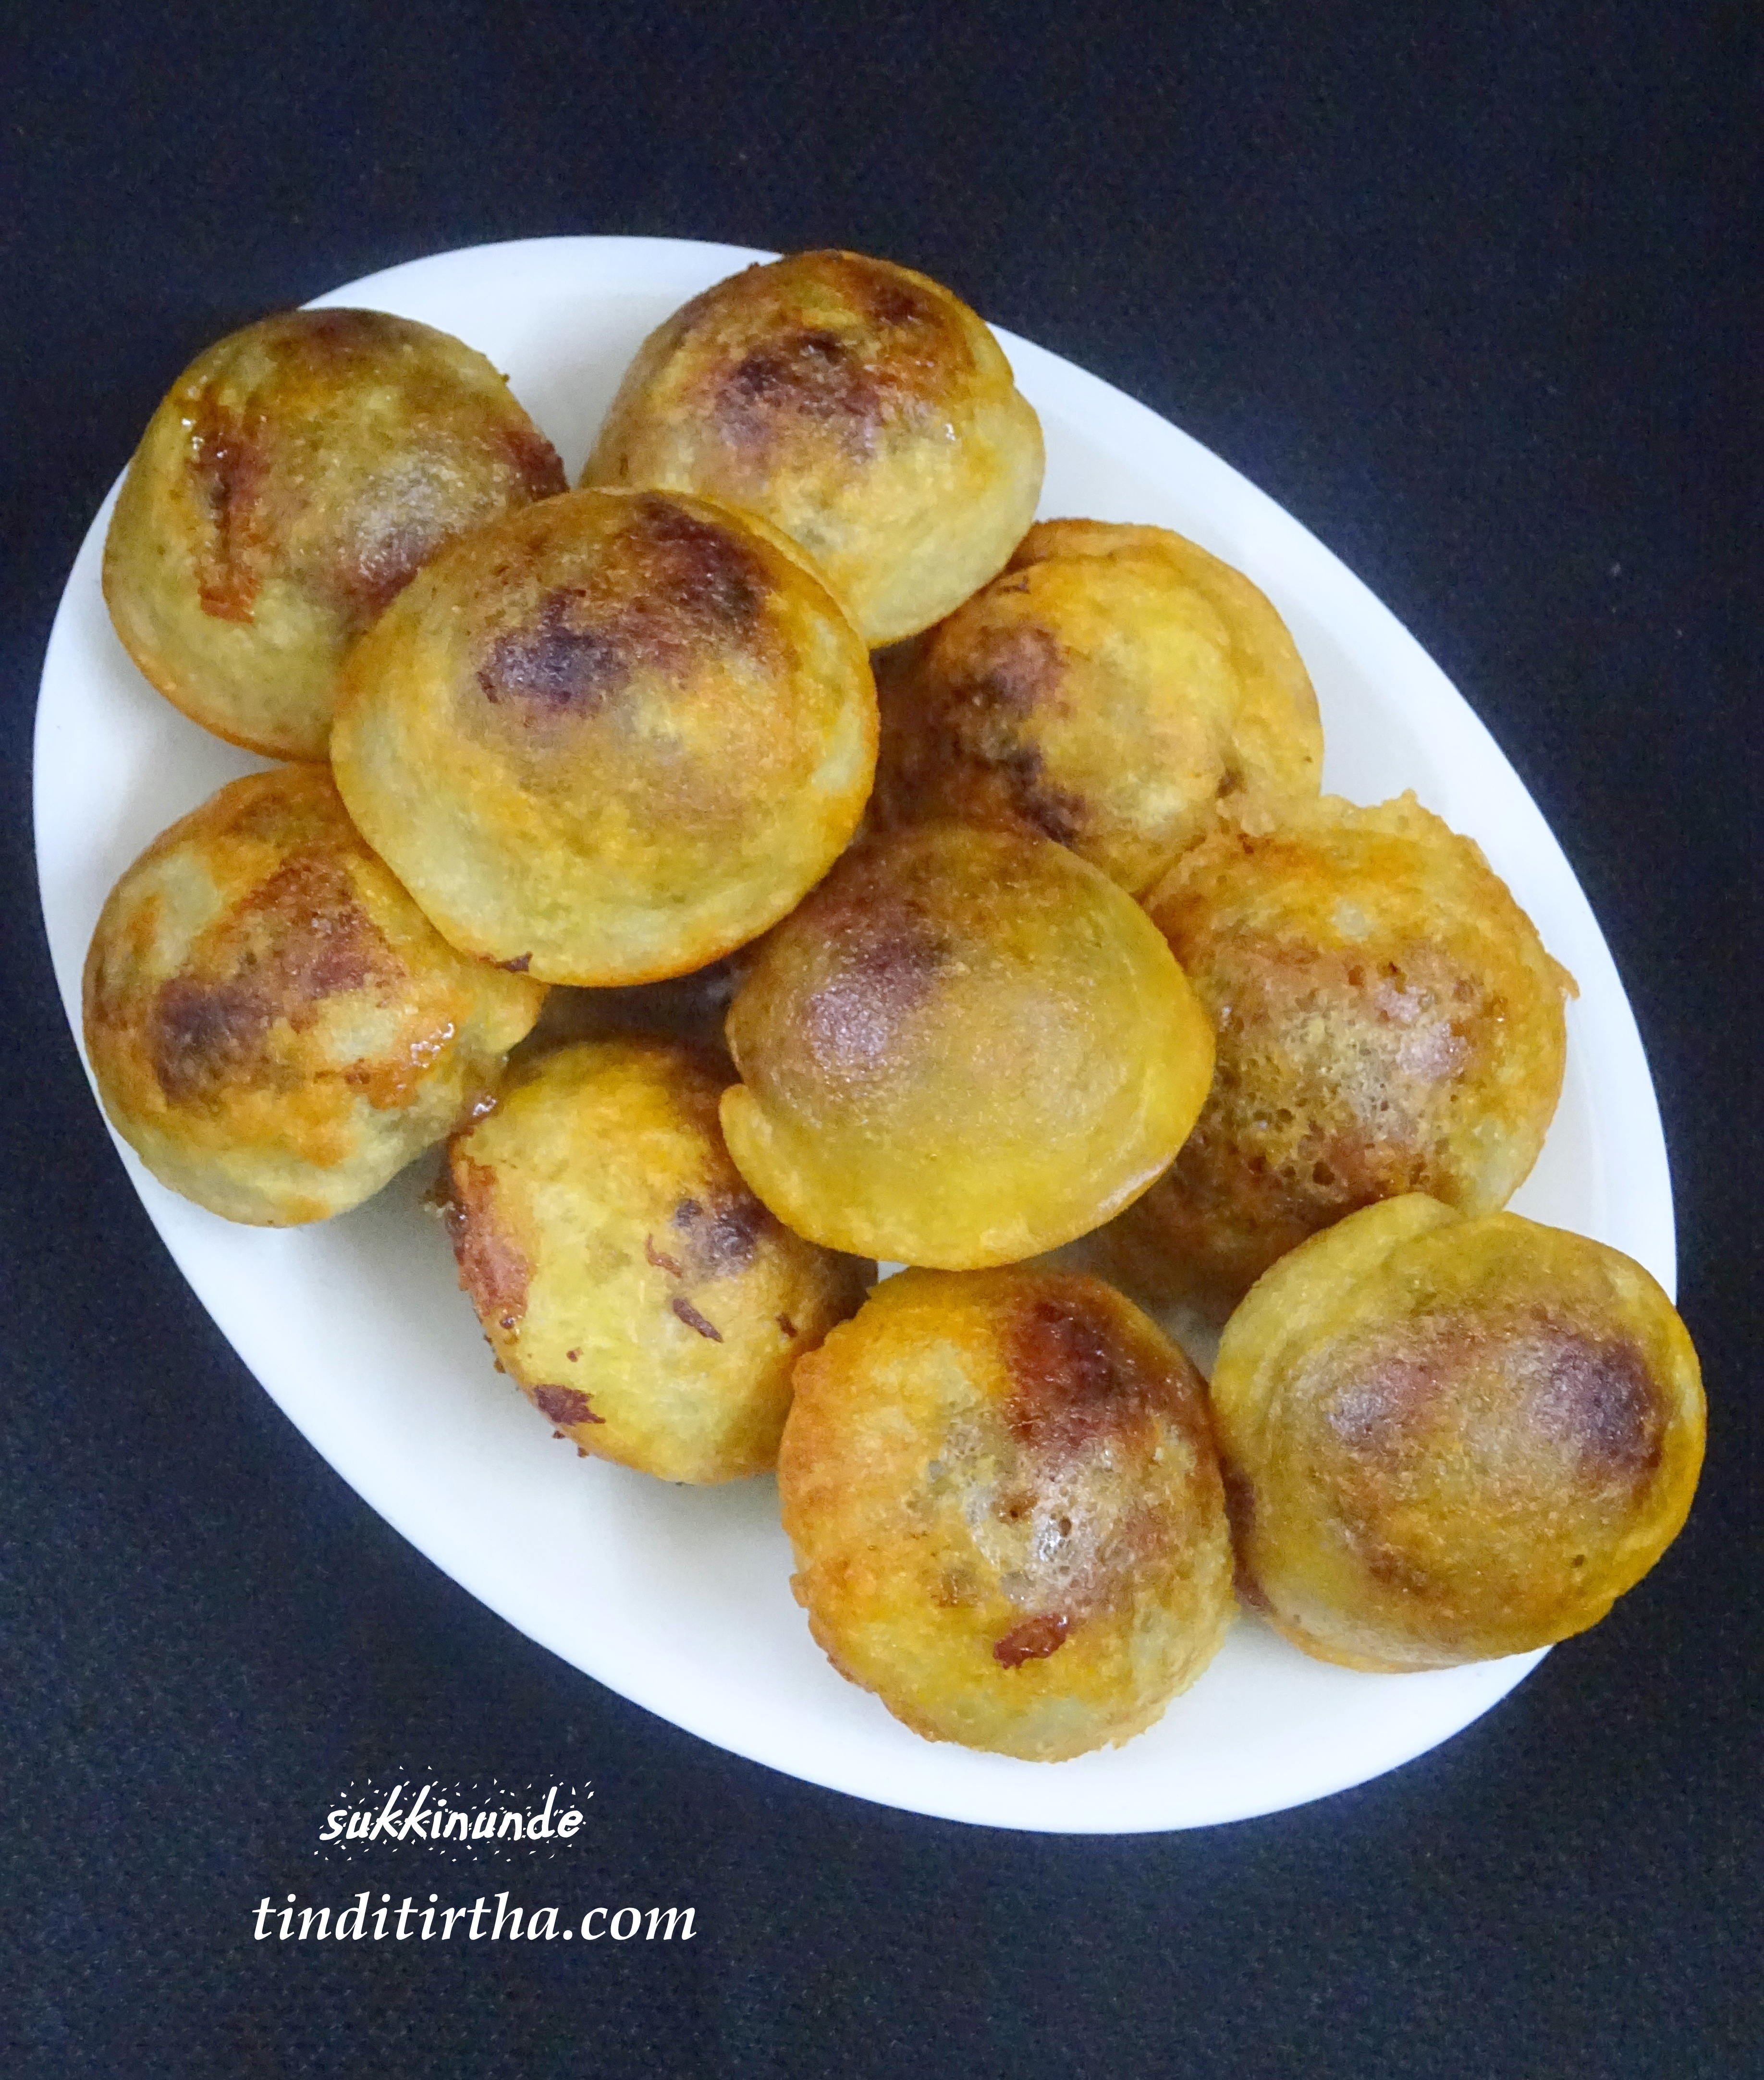 Sukkinunde a guilt free sweet indulgence made in appe/Paddu pan